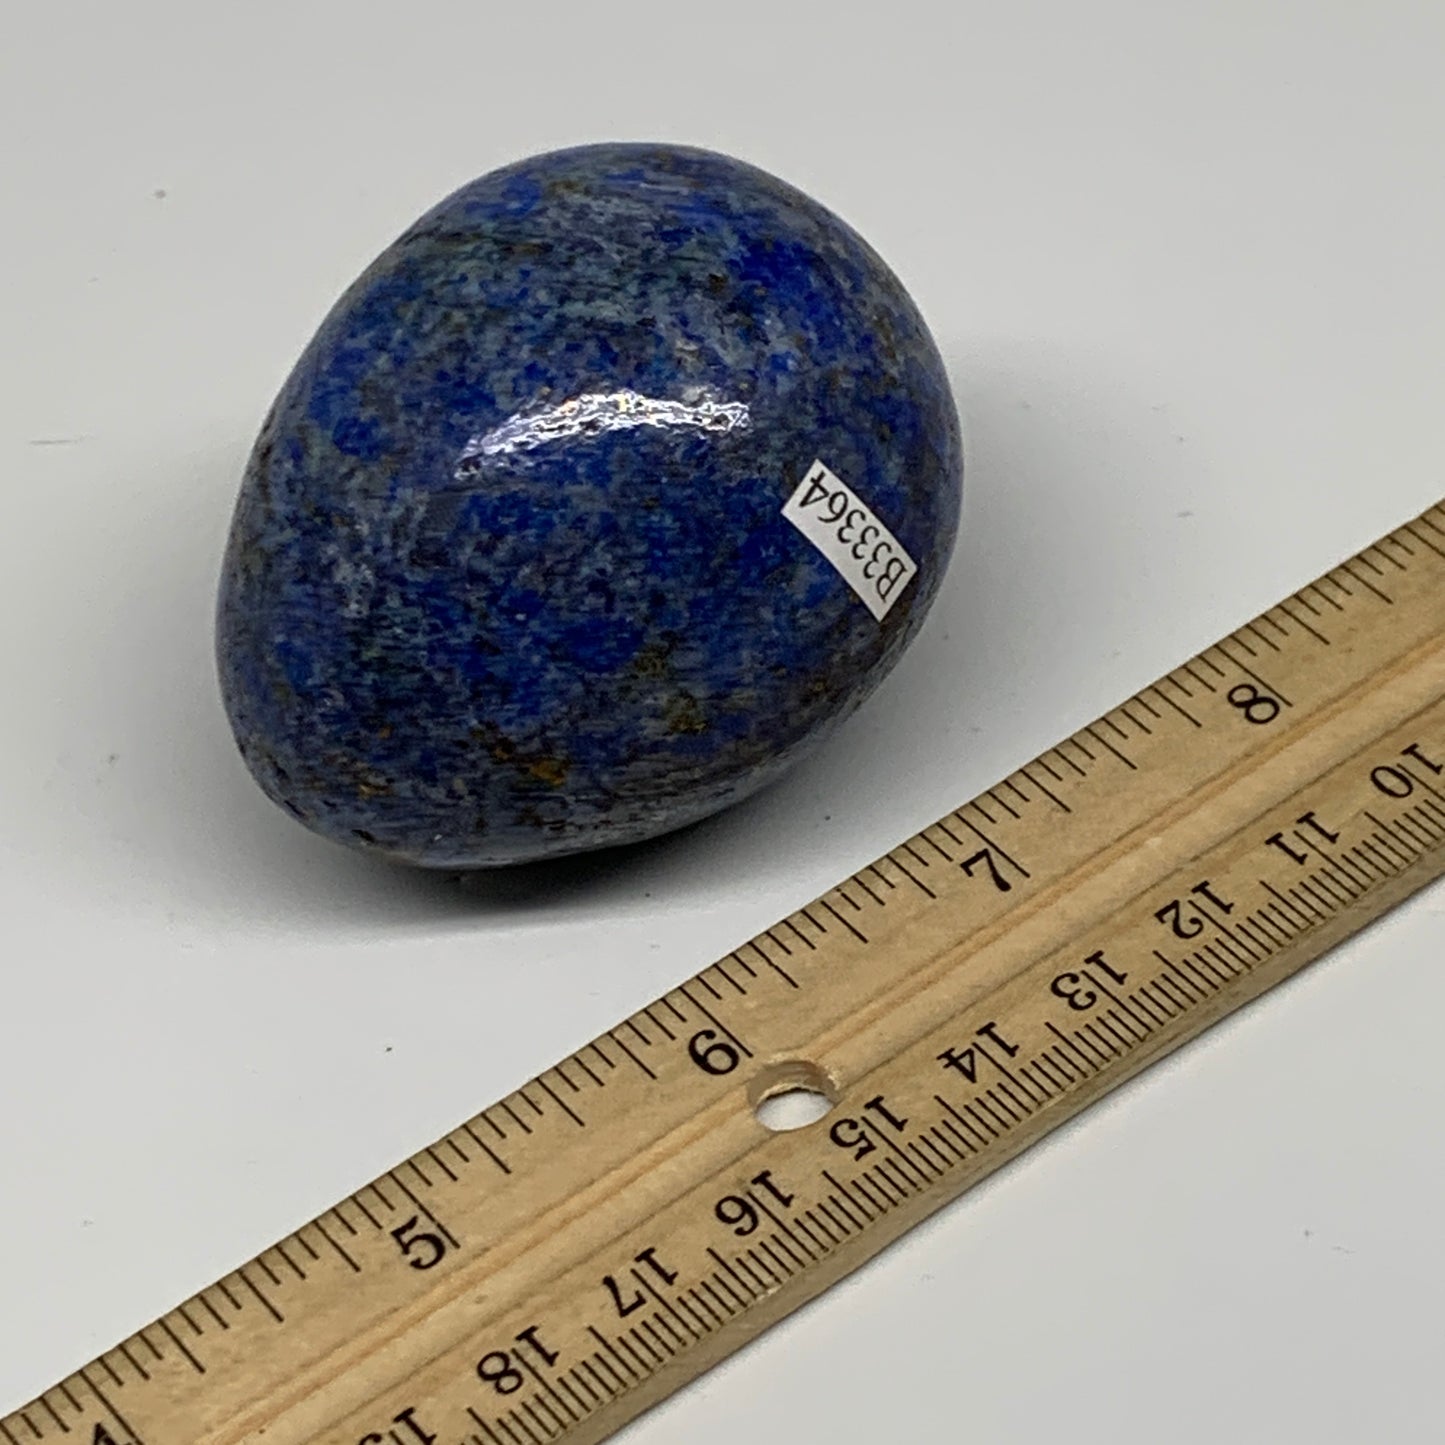 208.5g, 2.4"x1.9", Natural Lapis Lazuli Egg Polished, Clearance, B33364